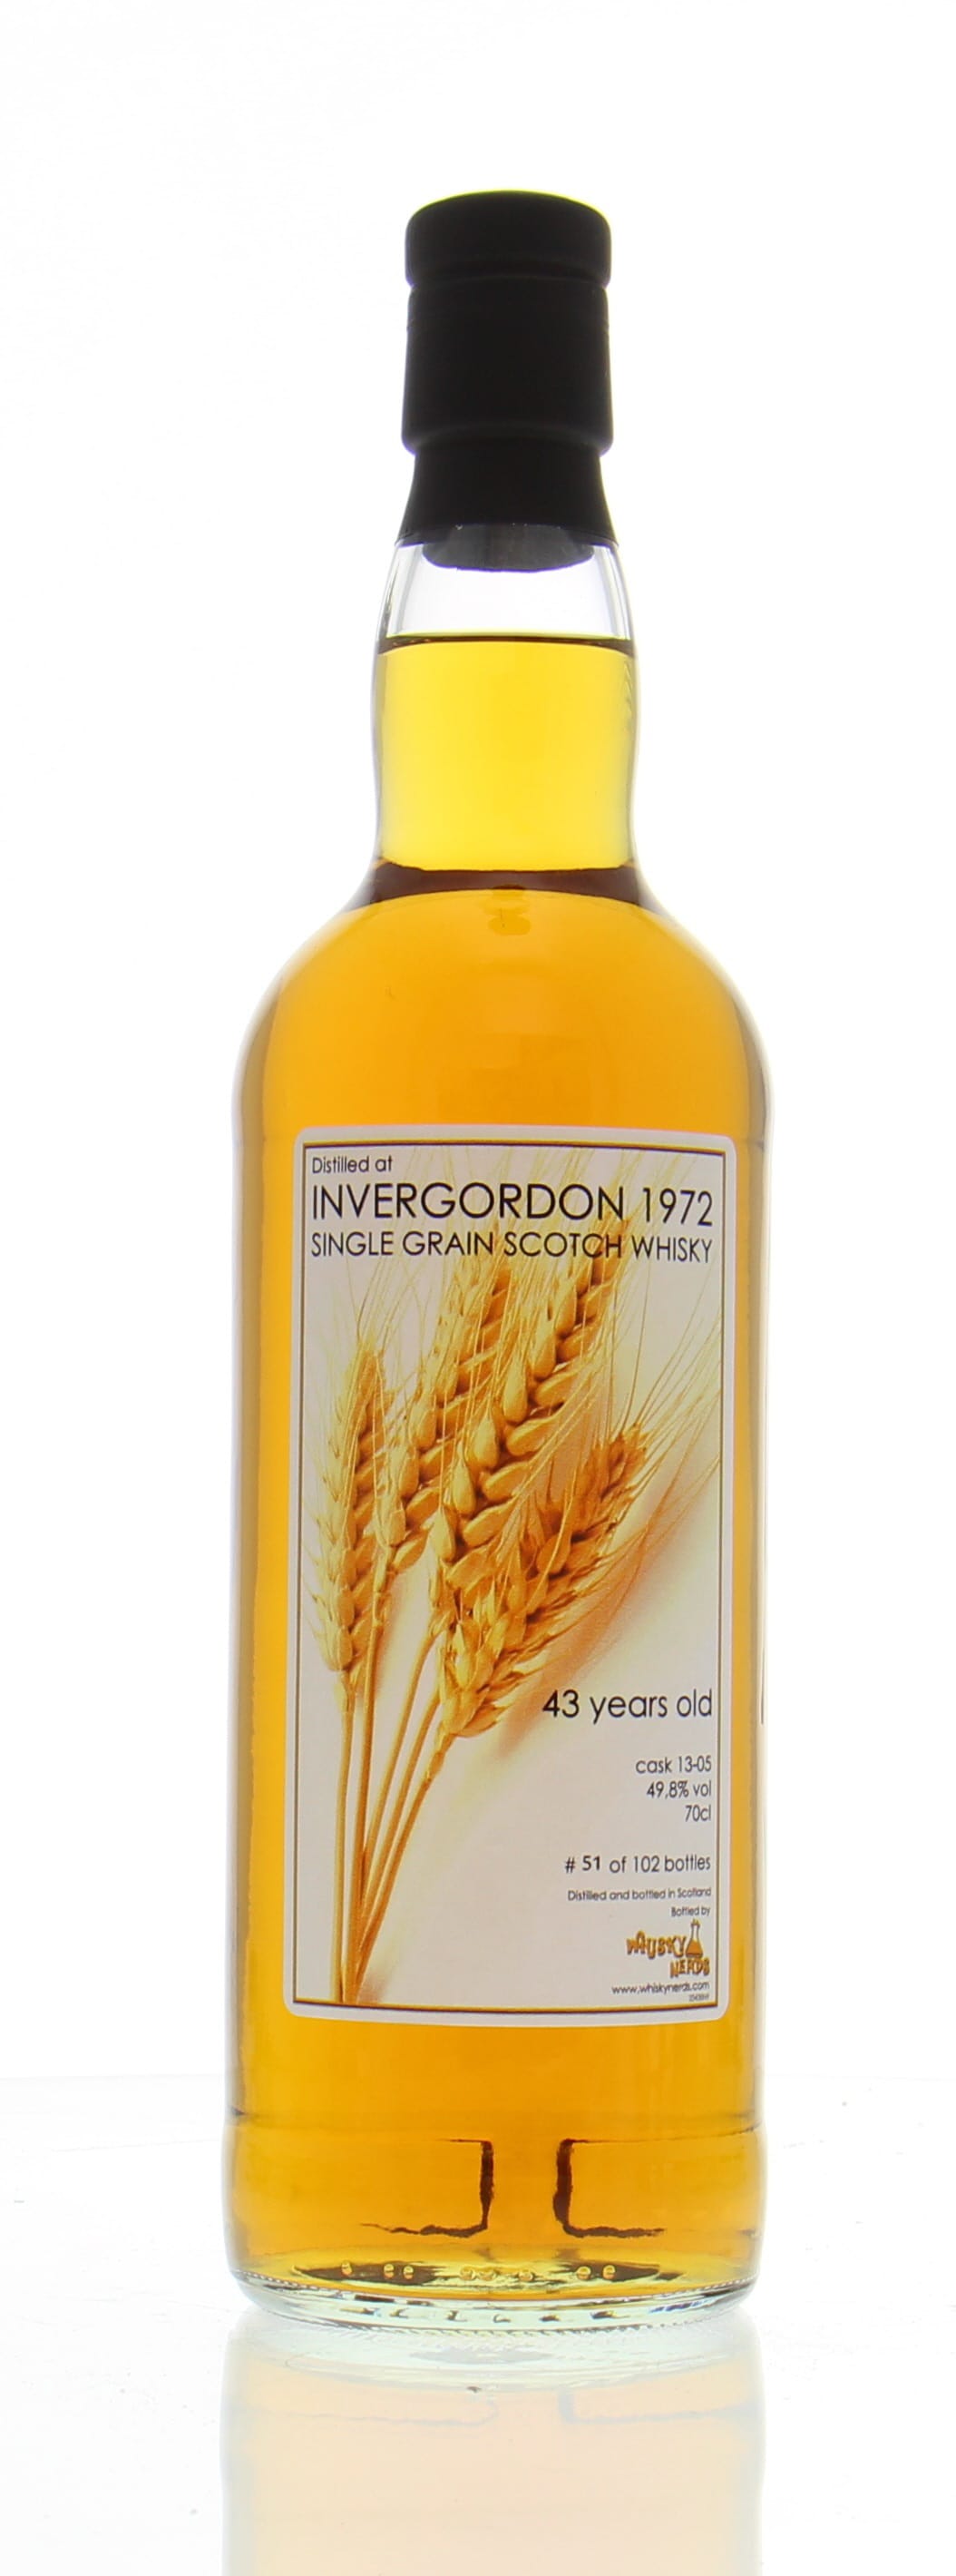 Invergordon - 43 Years Old WhiskyNerds Cask:13-05 49.8% 1972